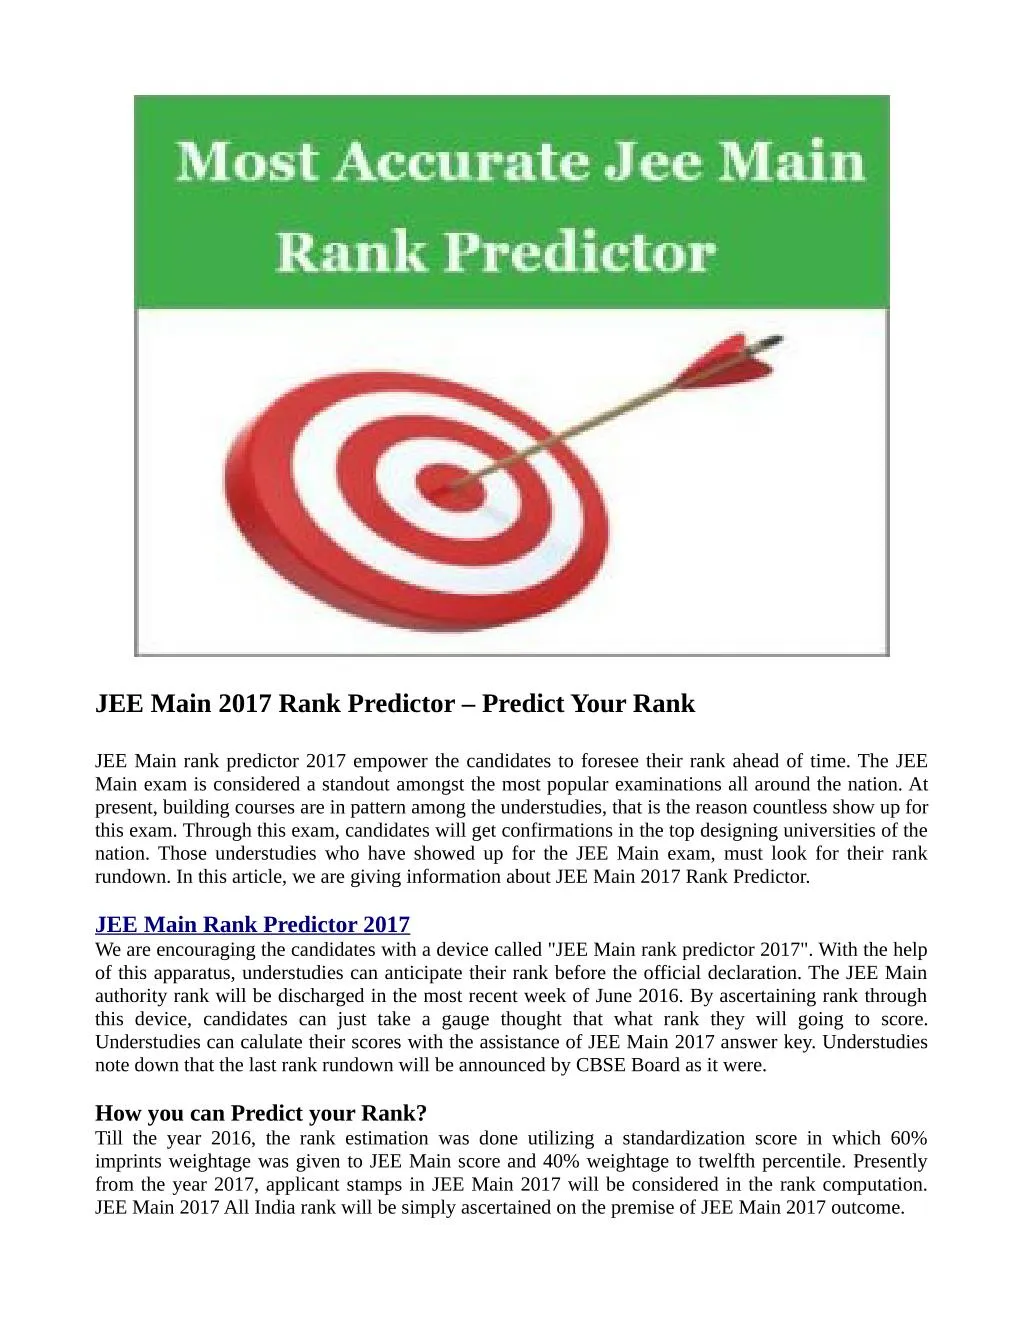 jee main 2017 rank predictor predict your rank